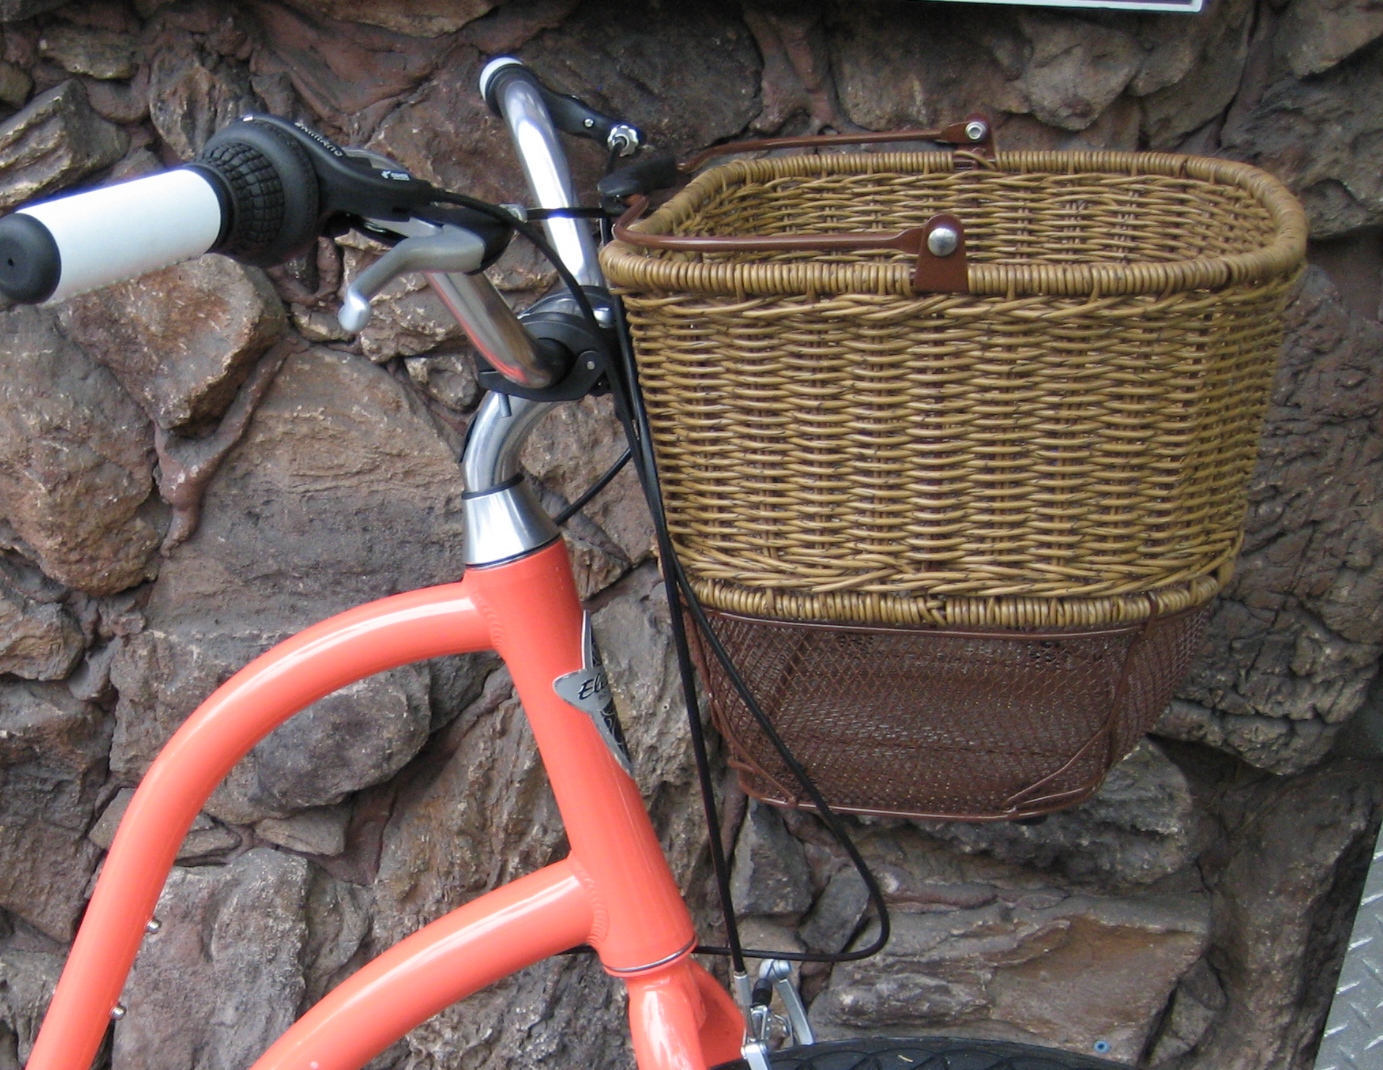 electra rear basket